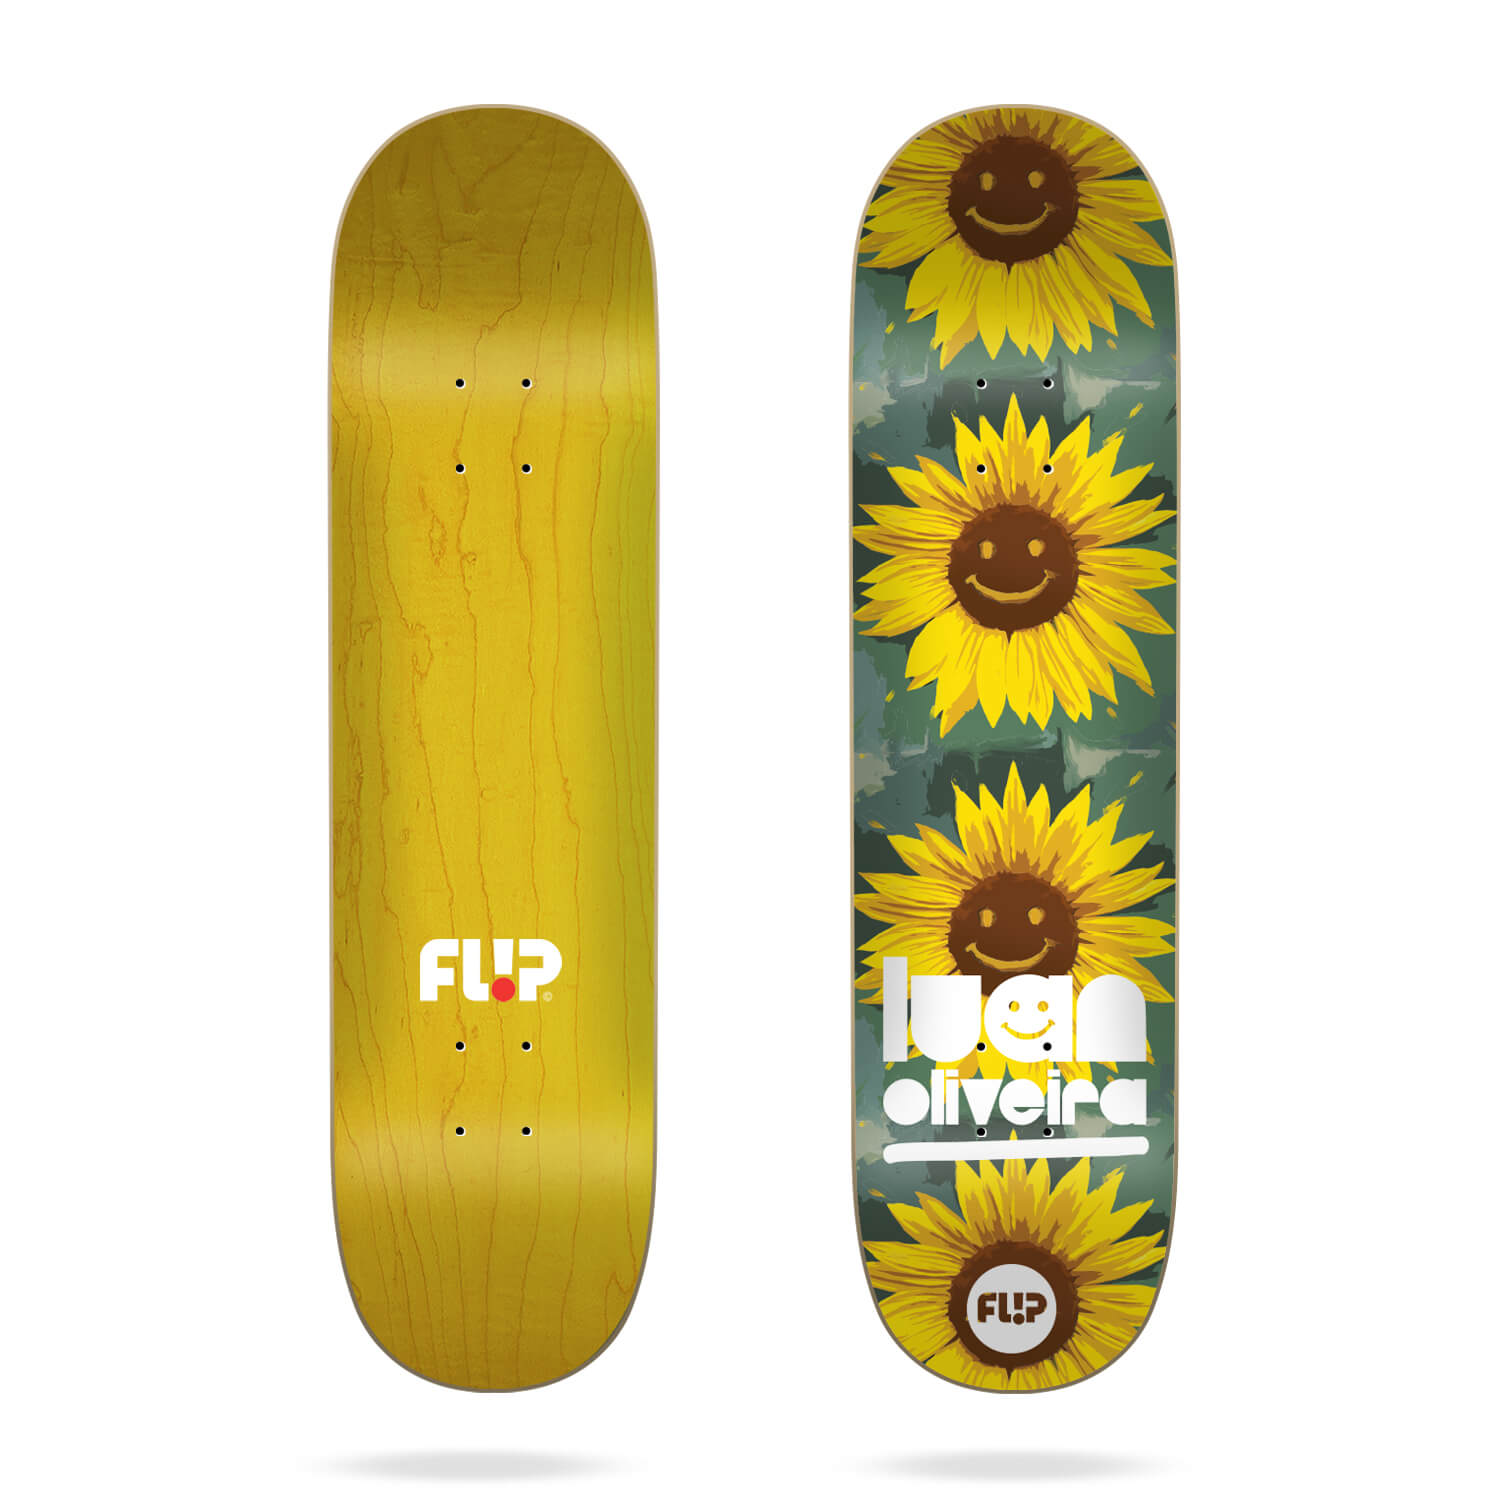 Flip Oliveira Flower Power 8.0